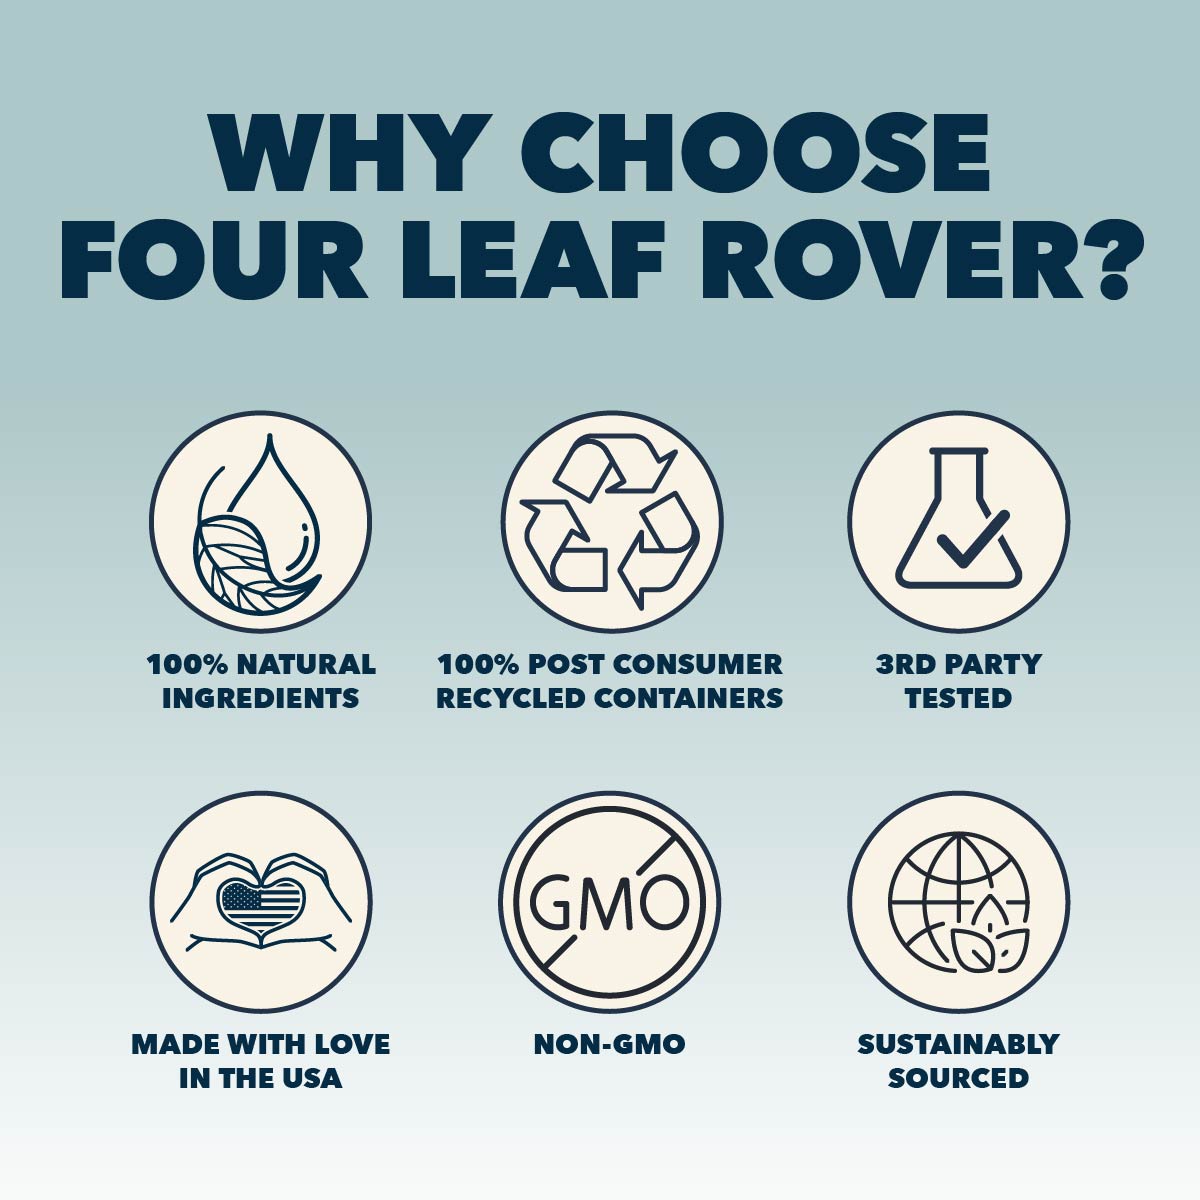 WHY CHOOSE FOUR LEAF ROVER? 